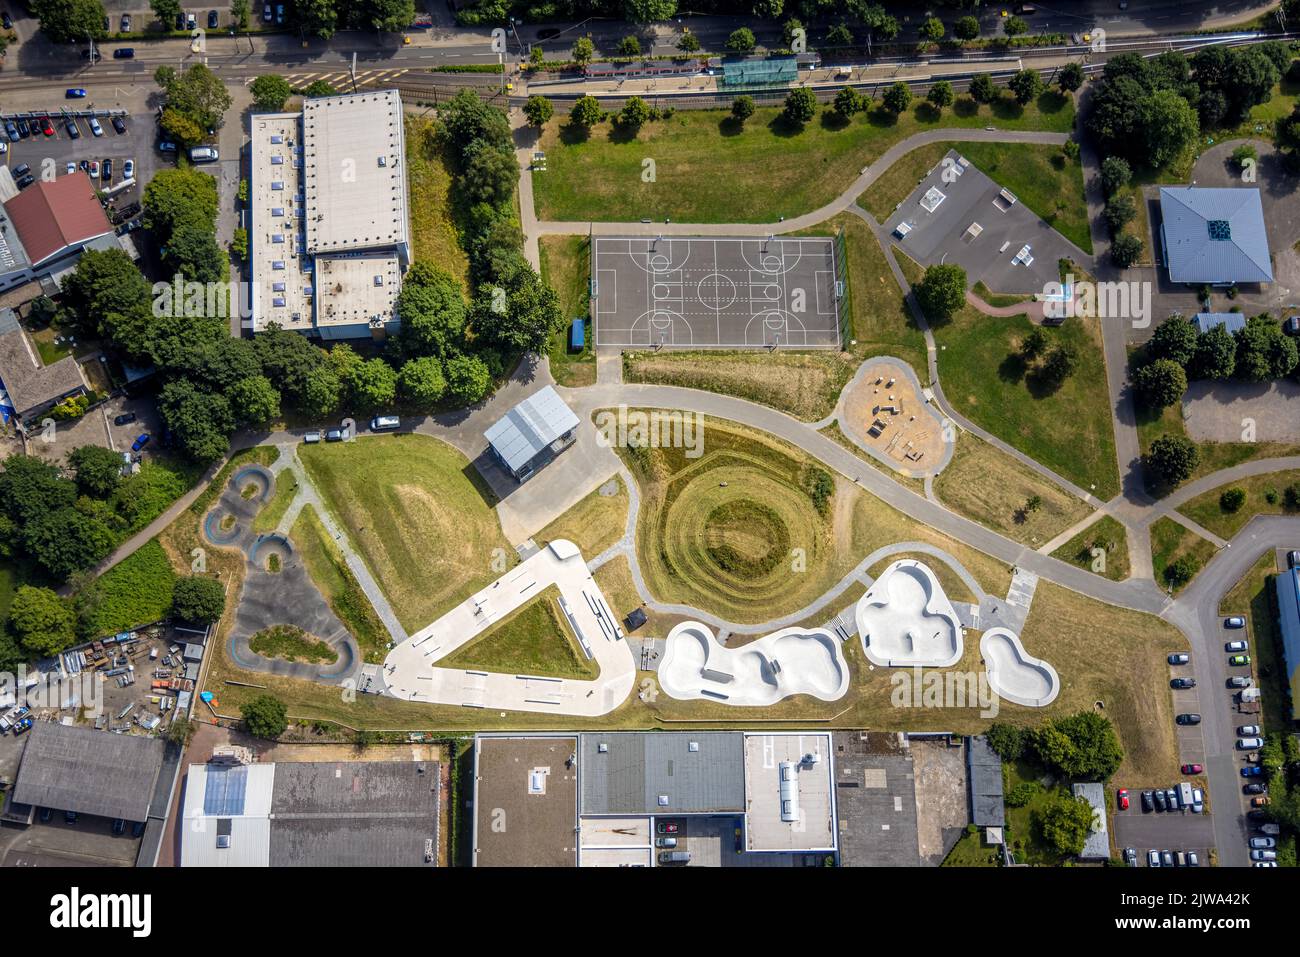 Aerial view, New Skatepark Hombruch, Dortmund, Ruhr Area, North Rhine-Westphalia, Germany, DE, Europe, Free time, Recreational facility, Recreational Stock Photo